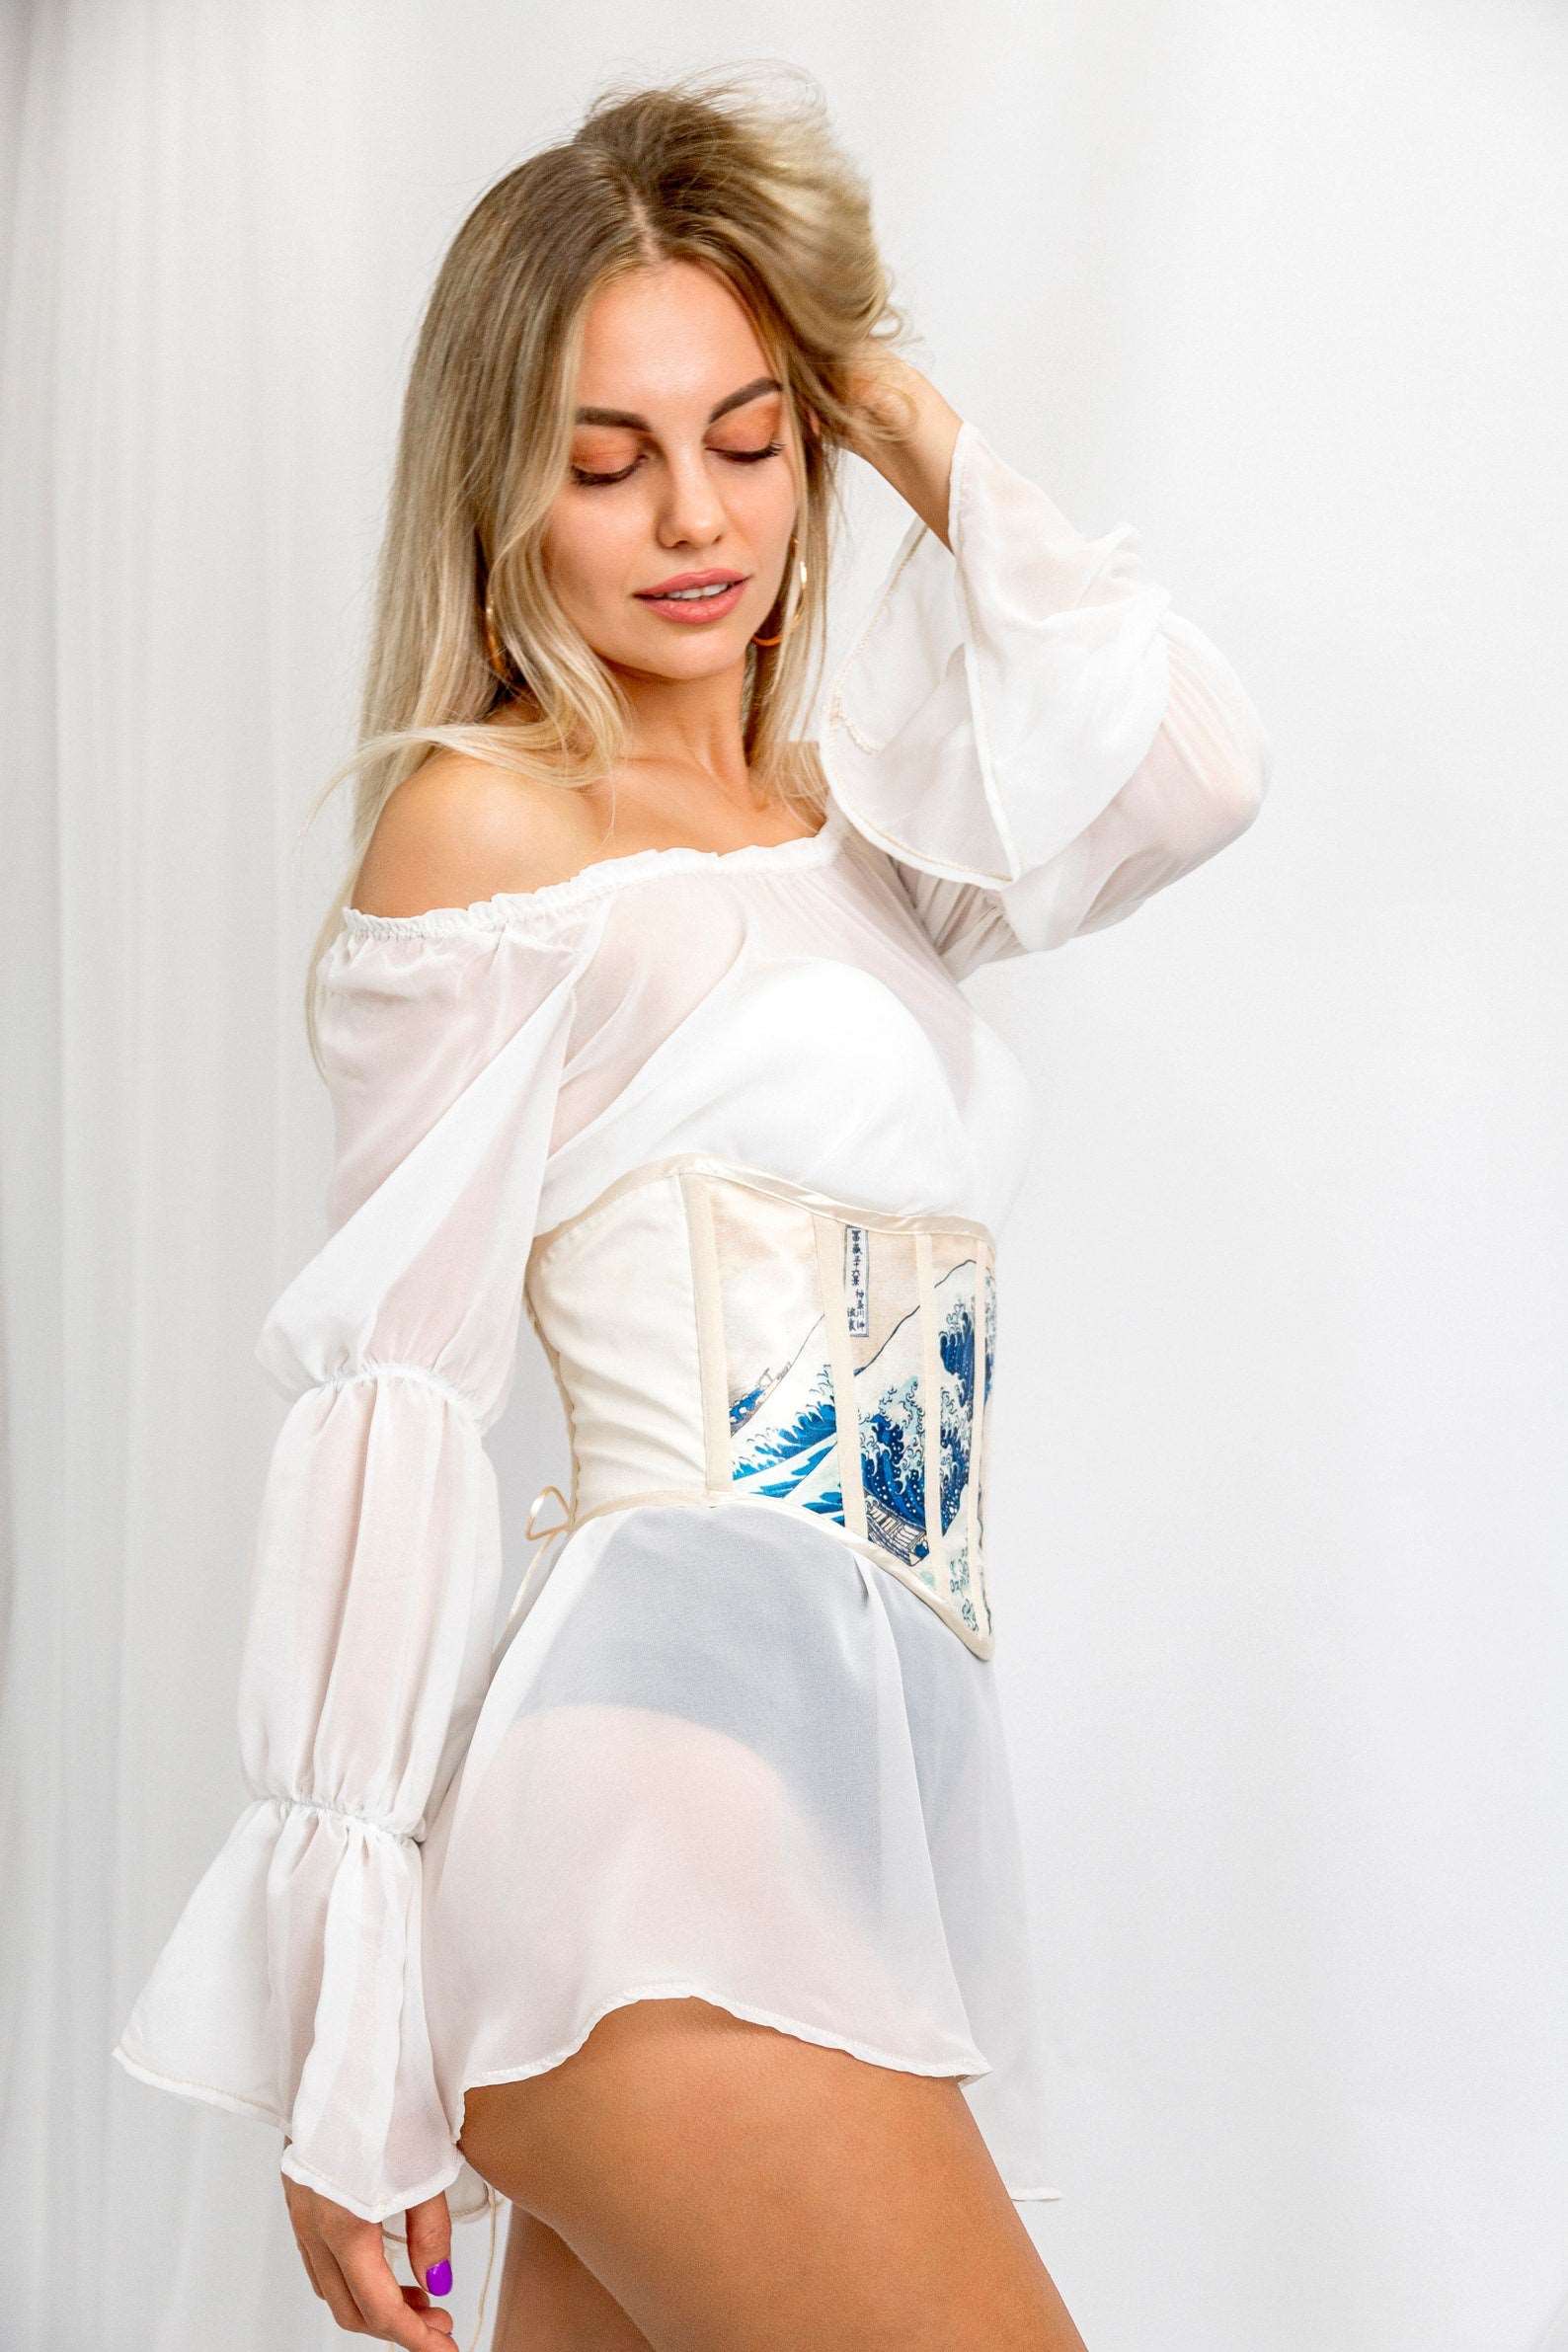 Tapestry underbust corset  Fairytale dress, Corset fashion, Vintage dresses